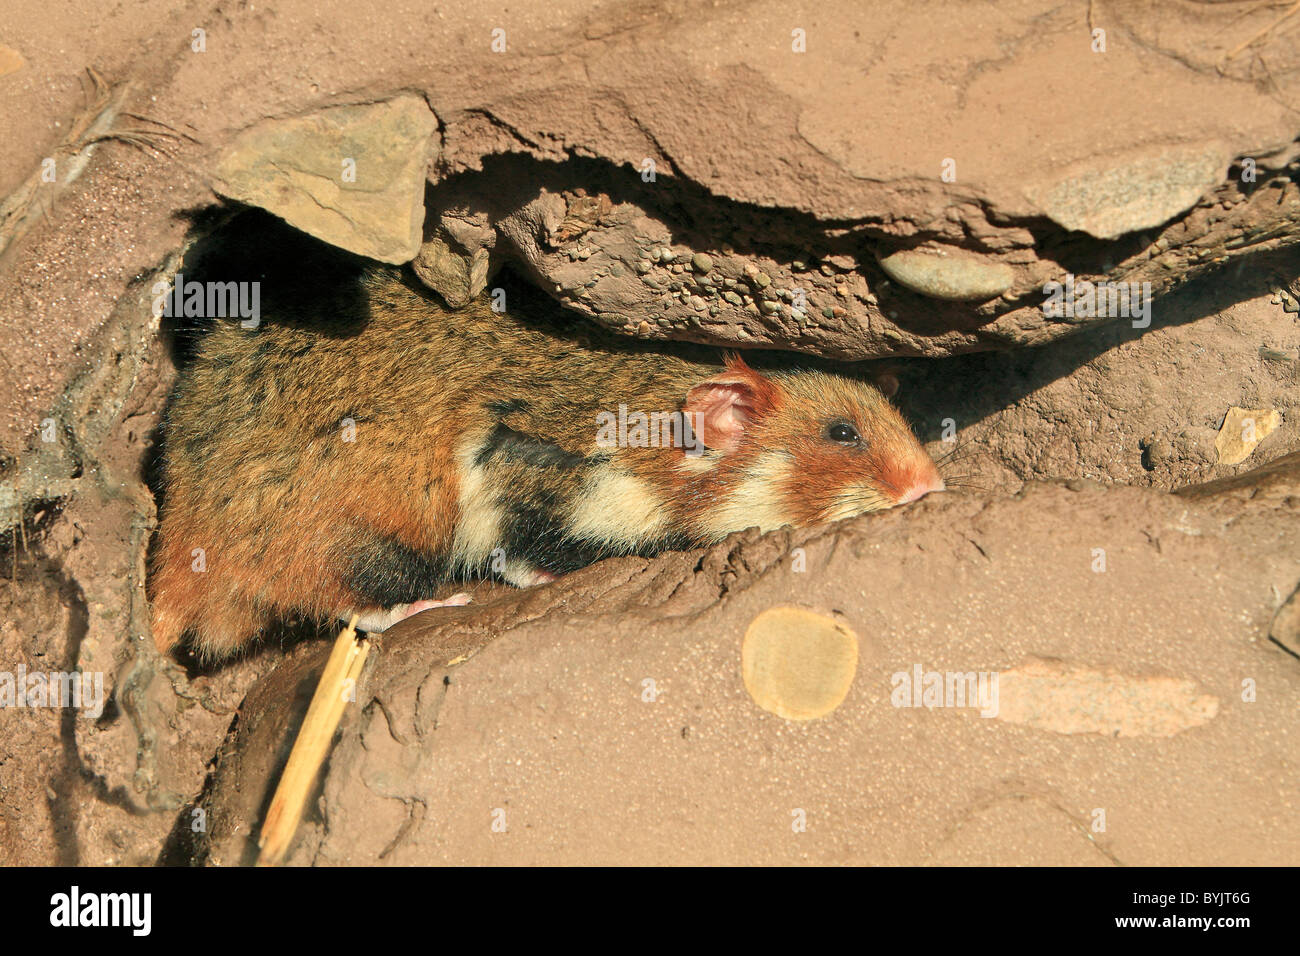 European Hamster, Black-bellied Hamster, Common Hamster (Cricetus cricetus) in its underground burrow. Stock Photo